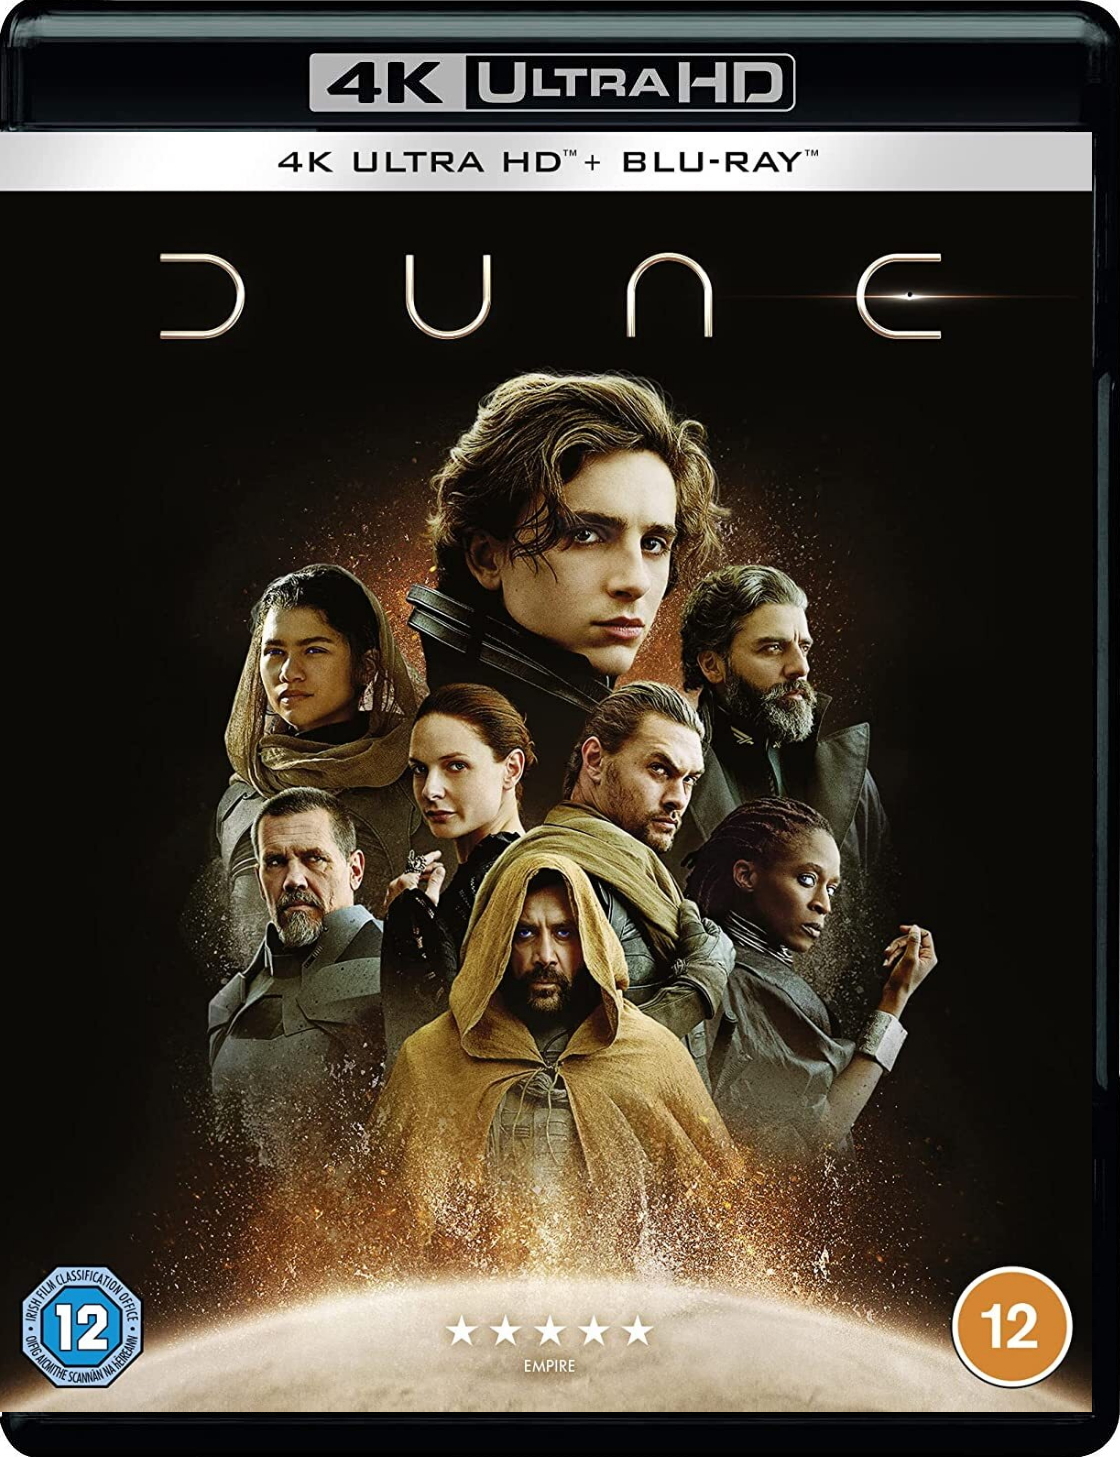 caido - Dune (2021) Duna (2021) [AC3 5.1 + SUP] [4K UHD Blu Ray] 303760_front